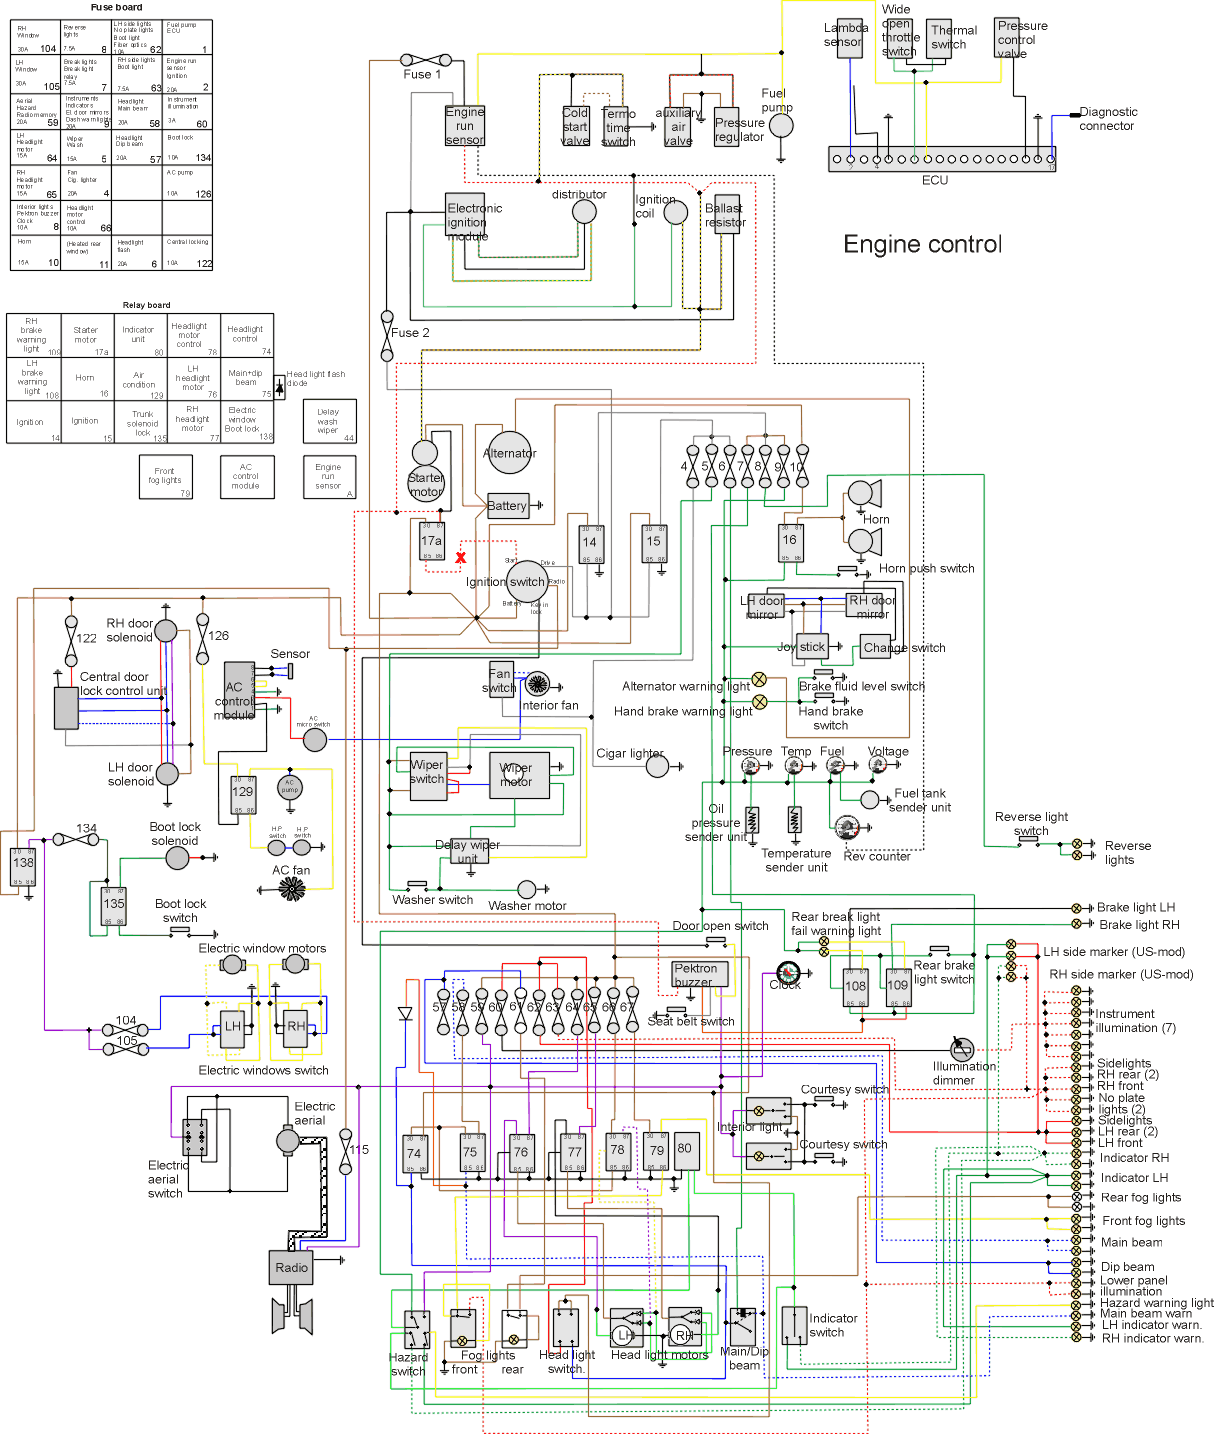 tvr wiring diagram - Wiring Diagram